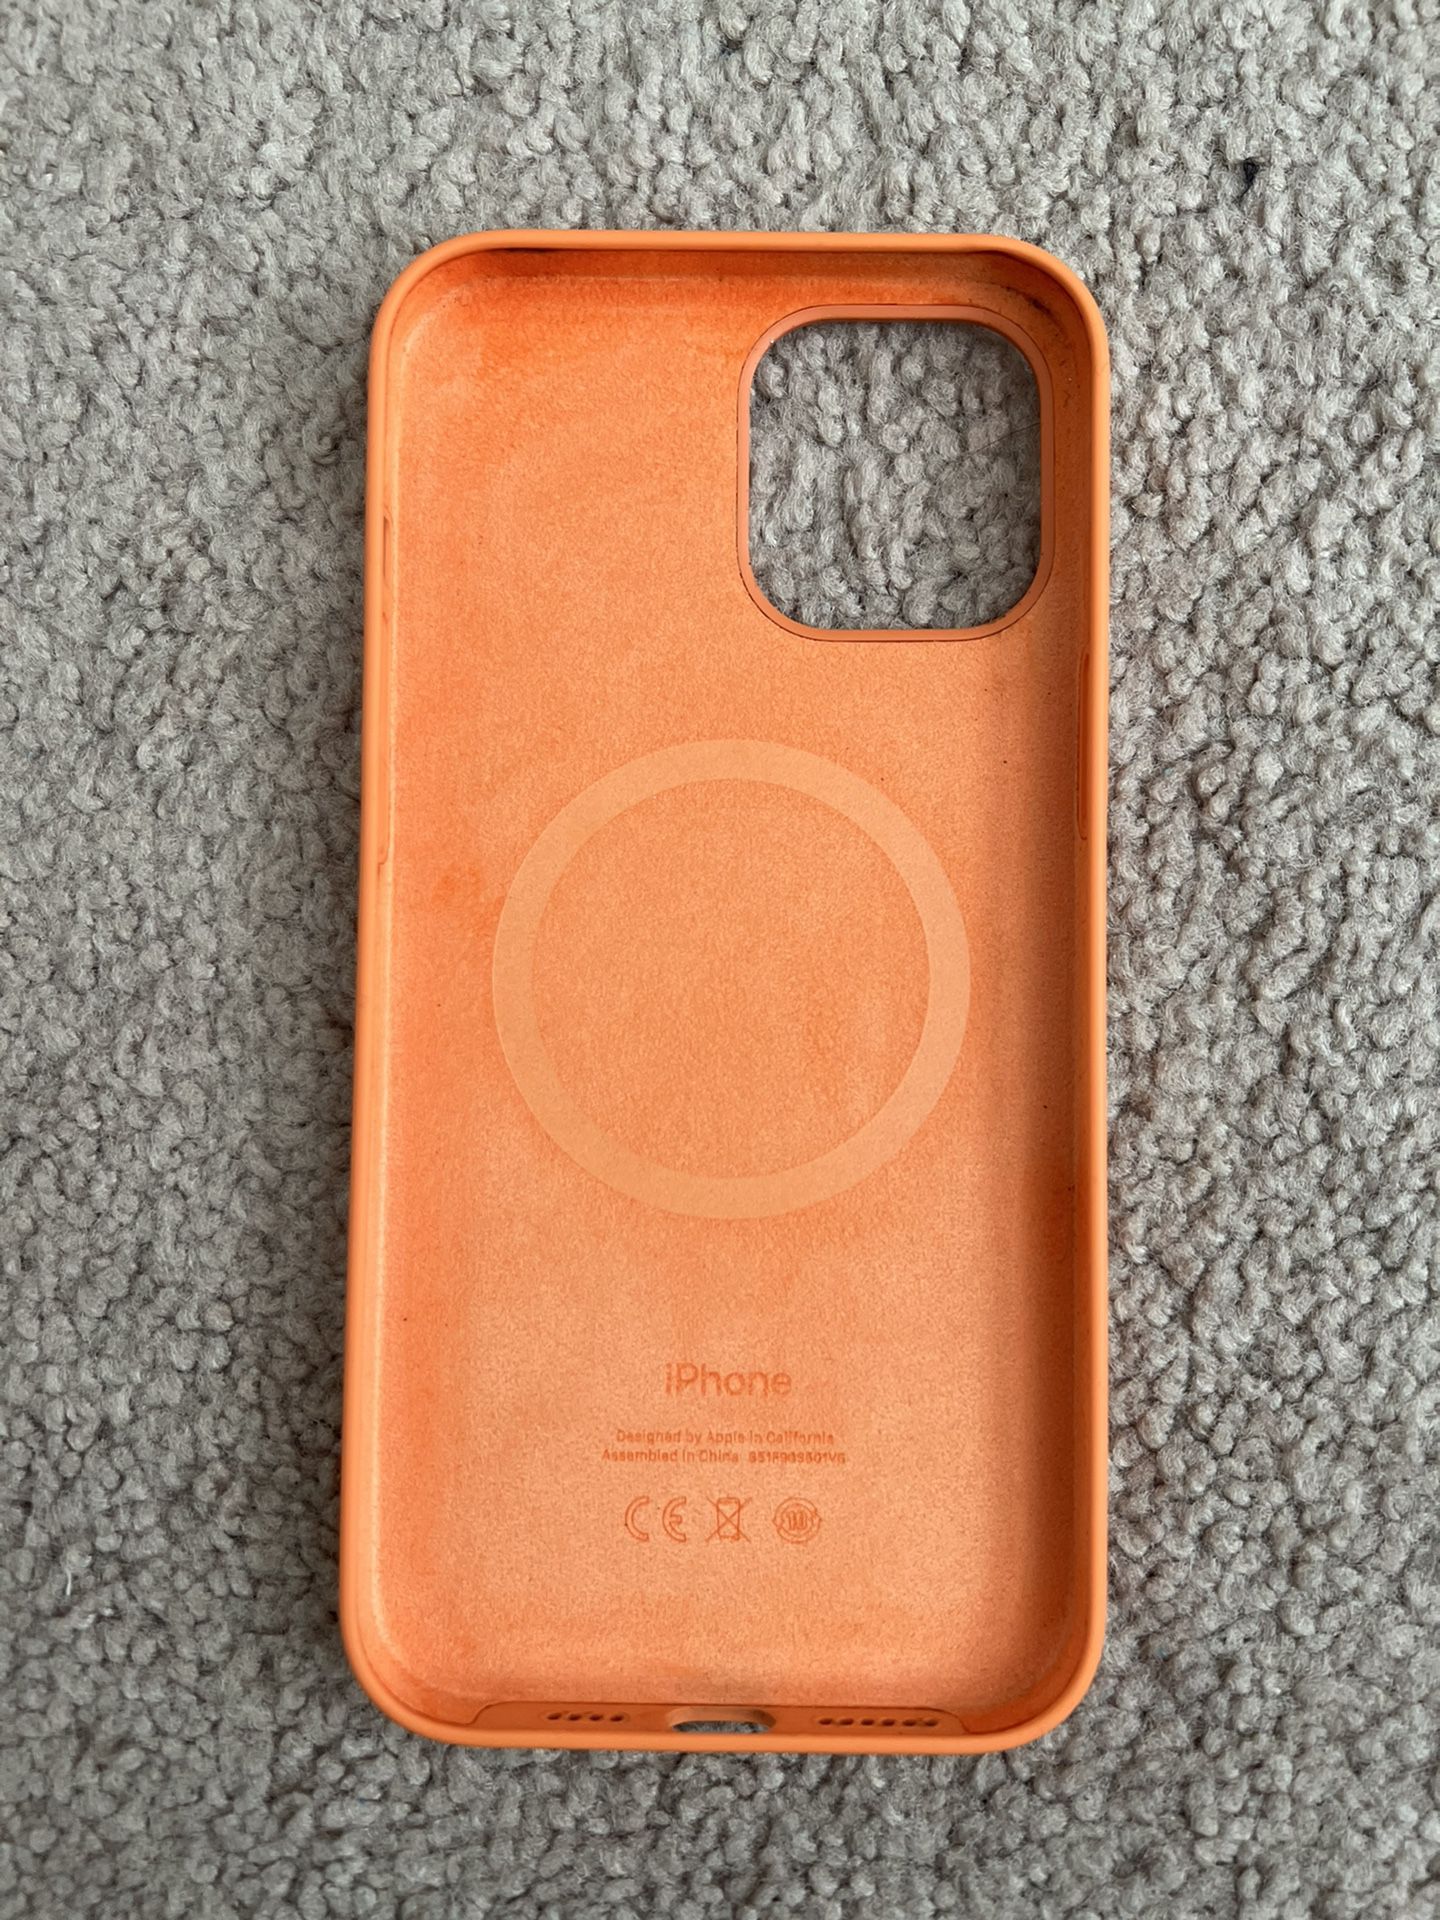 Supreme iPhone 12 Pro Max Case for Sale in Carson, CA - OfferUp